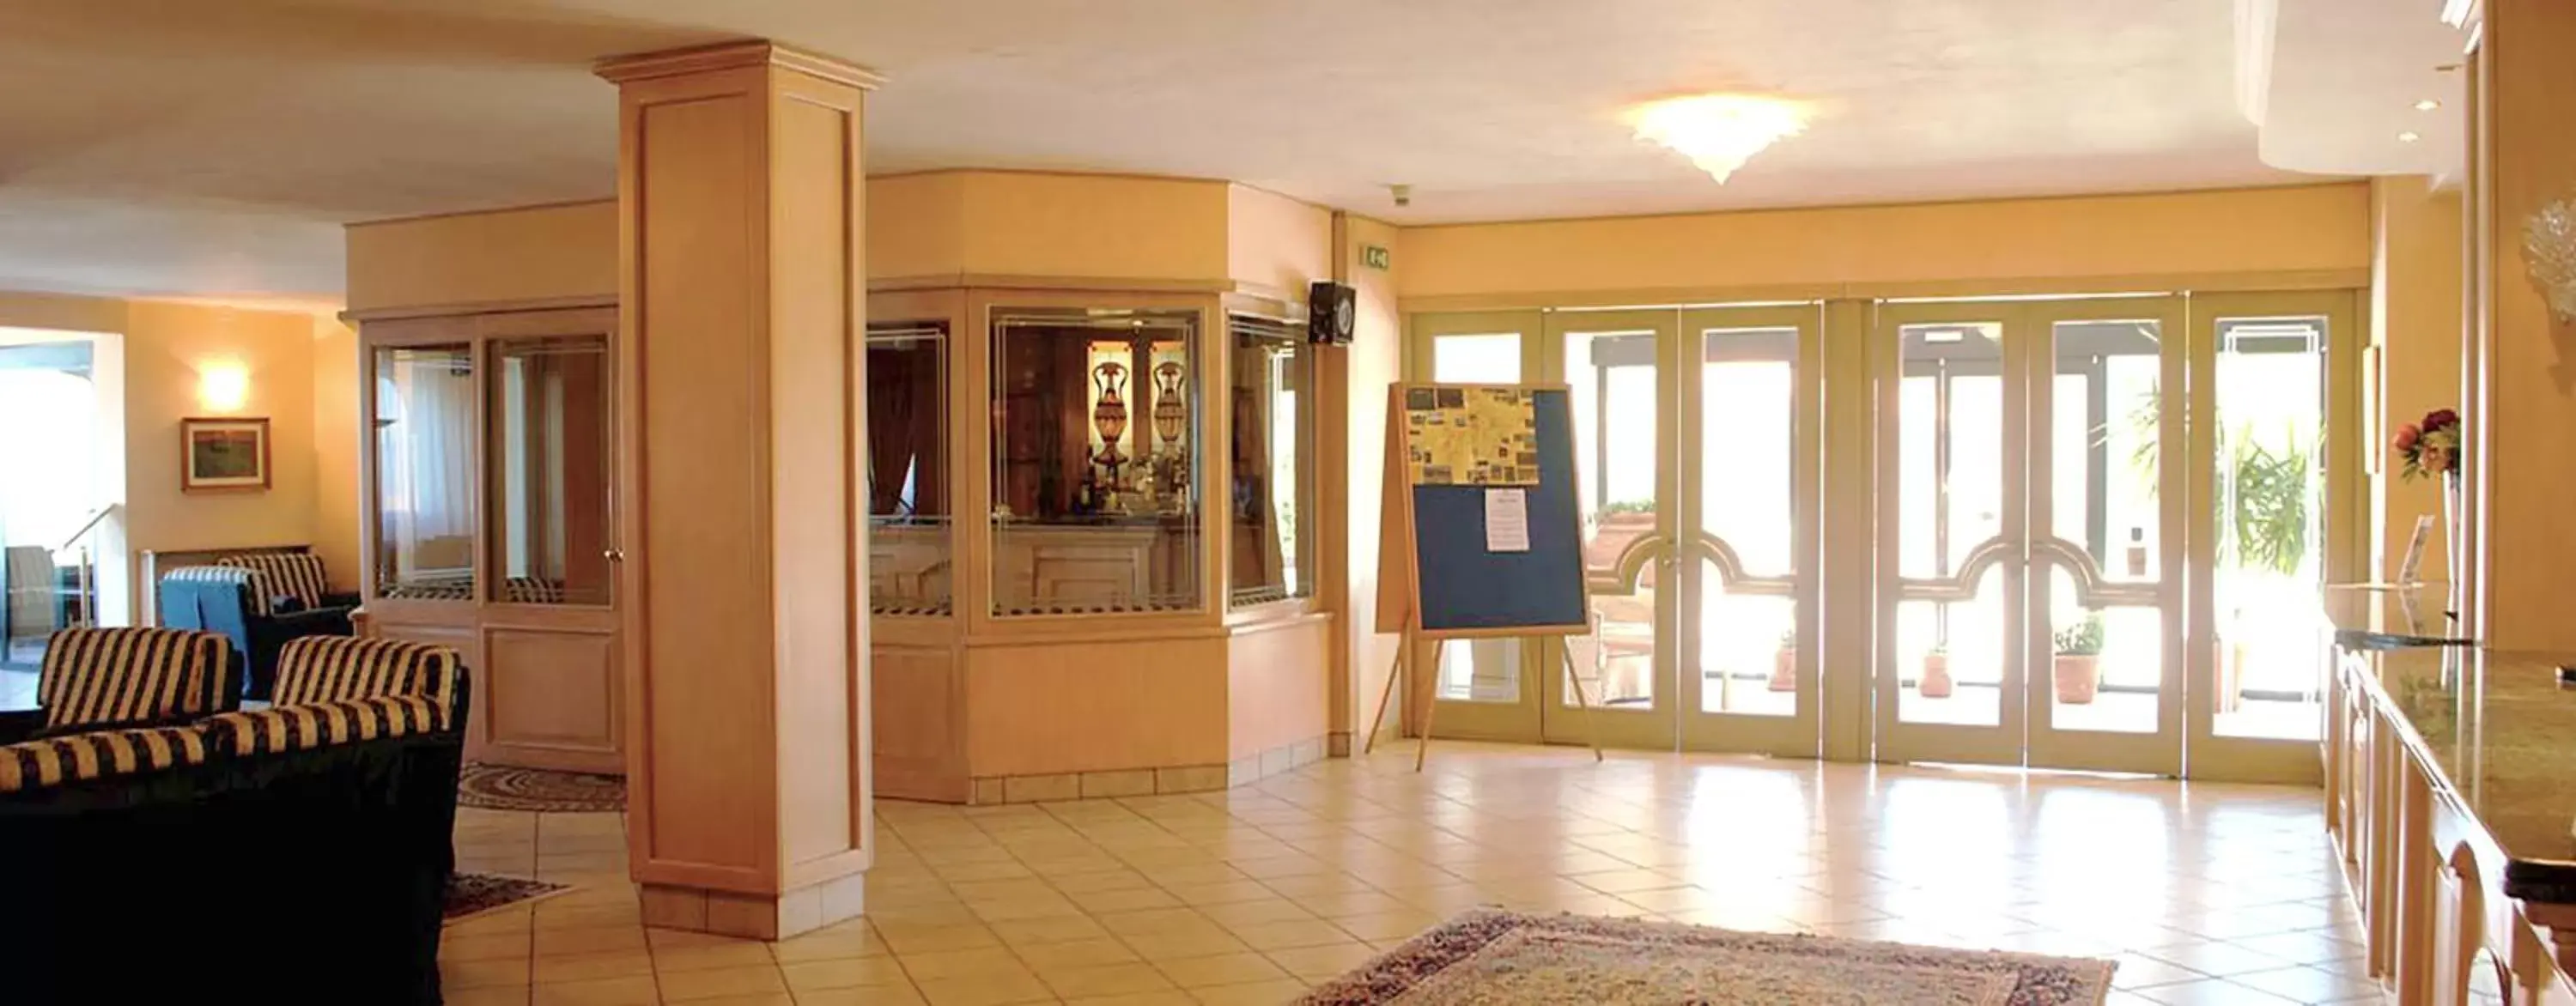 Lobby or reception in Toscana Wellness Resort